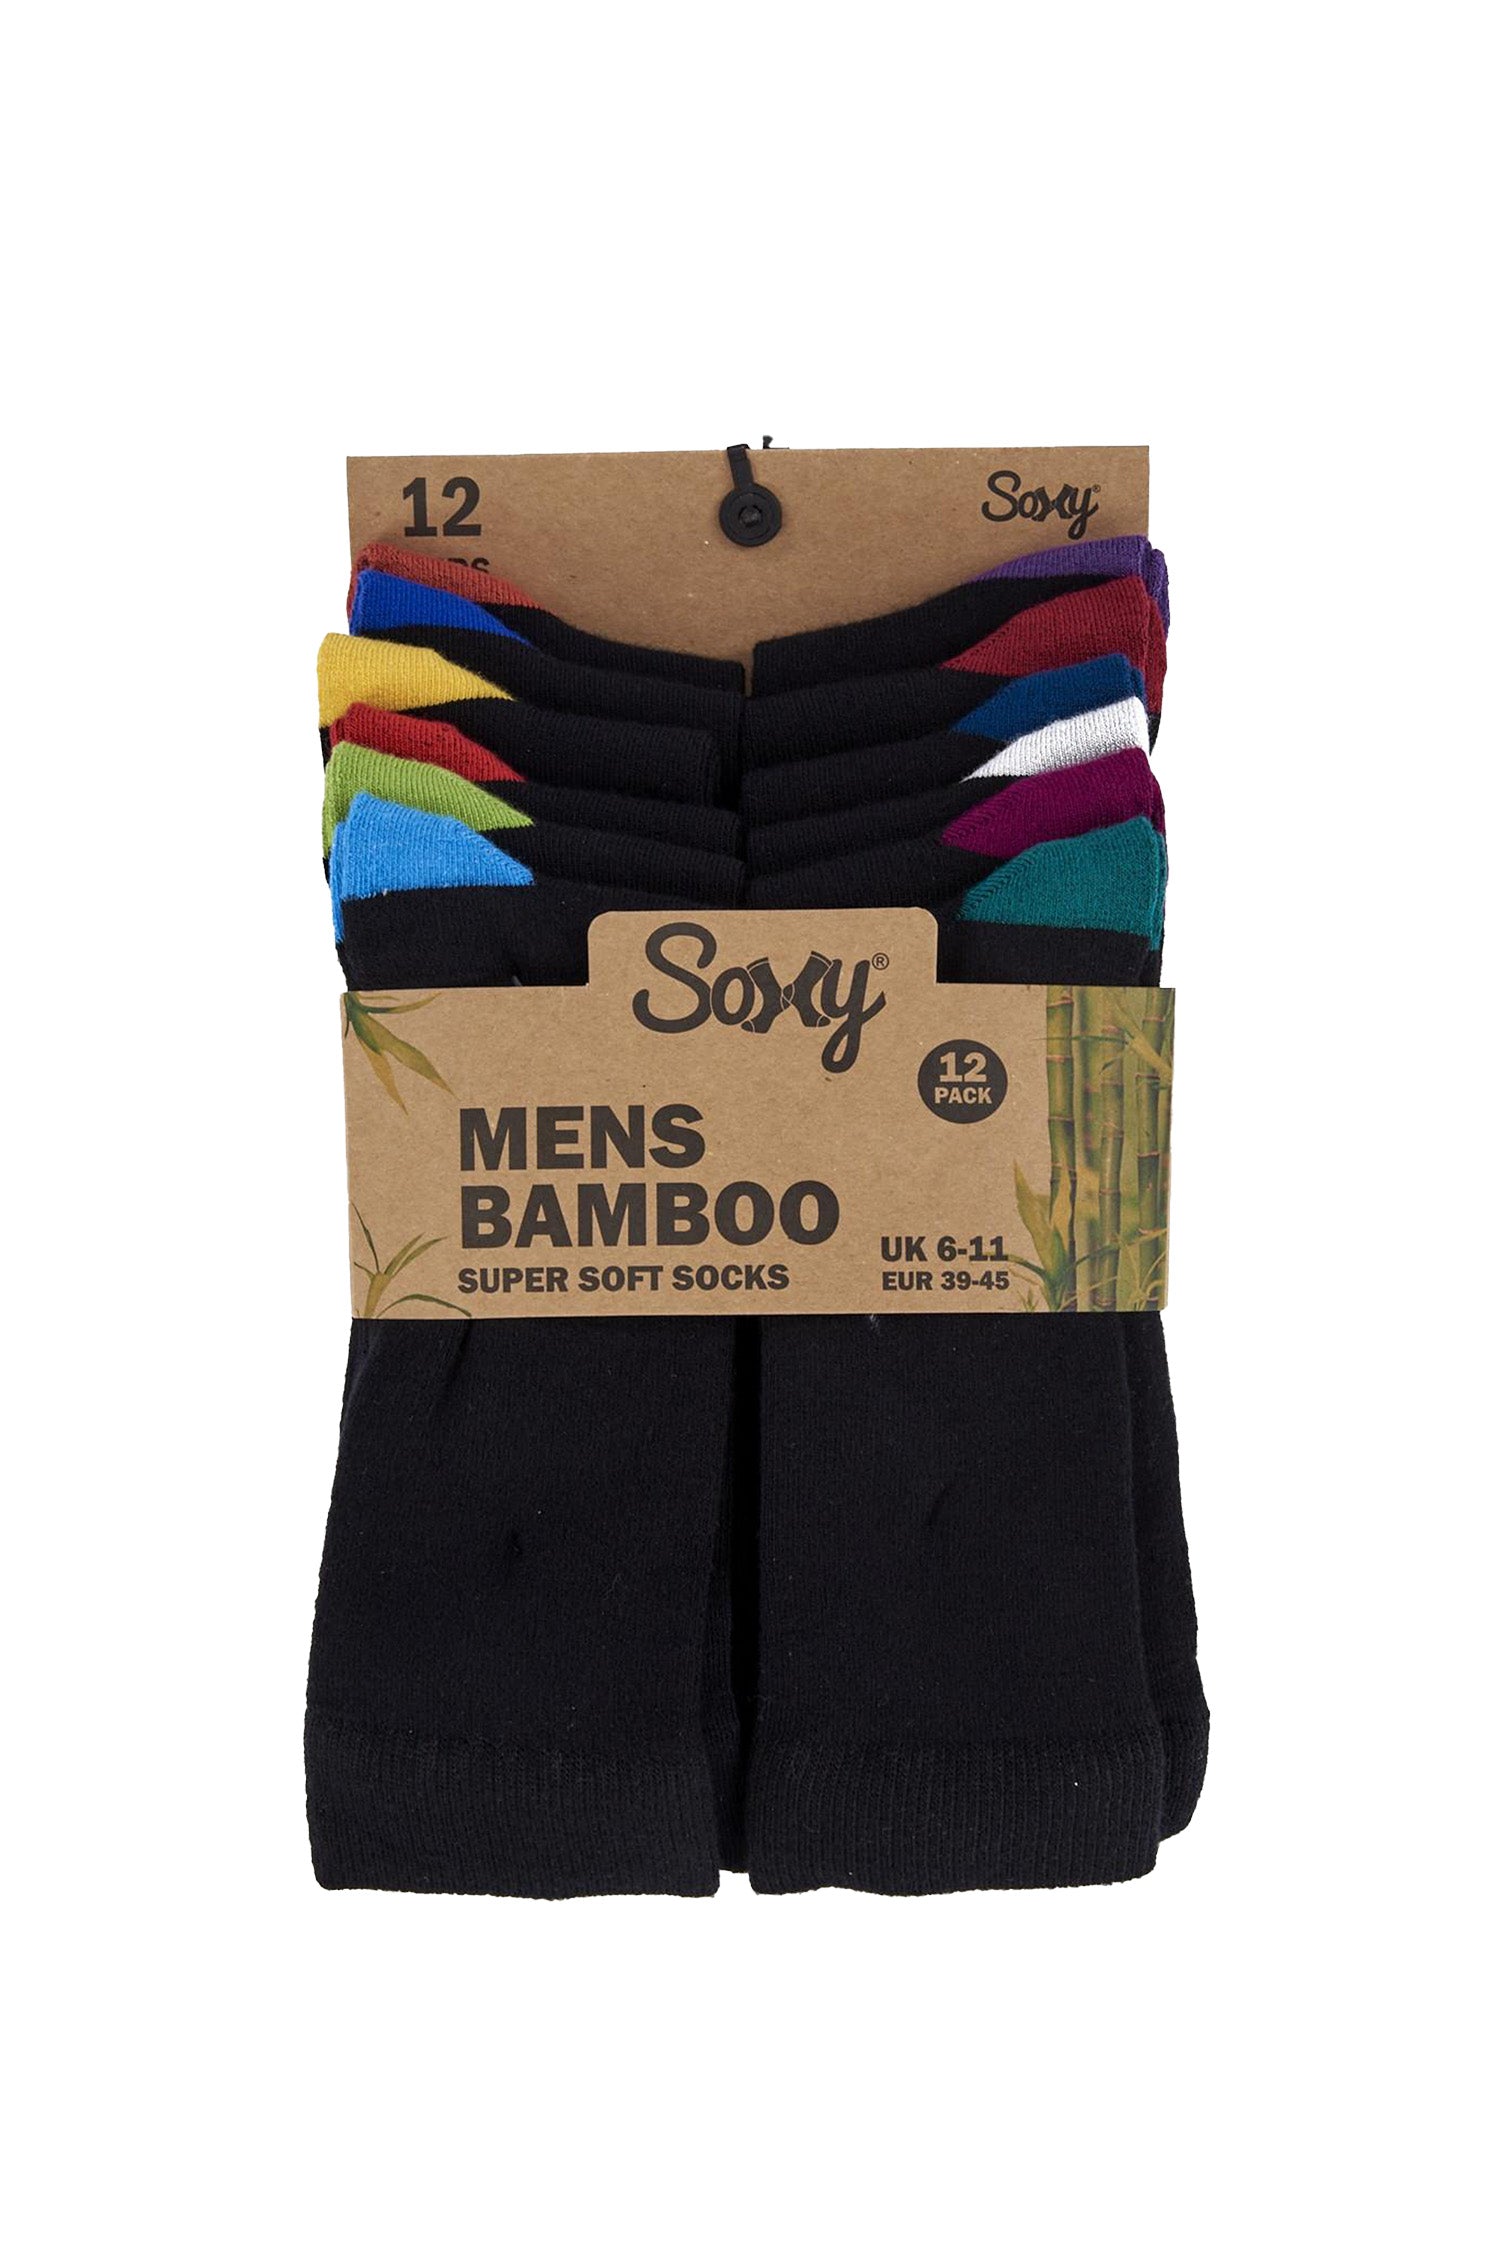 Mens Bamboo Dress Socks, Calf Size, Anti Bacterial Socks - Black Socks with Colour Heel and Toe (12 Pack)